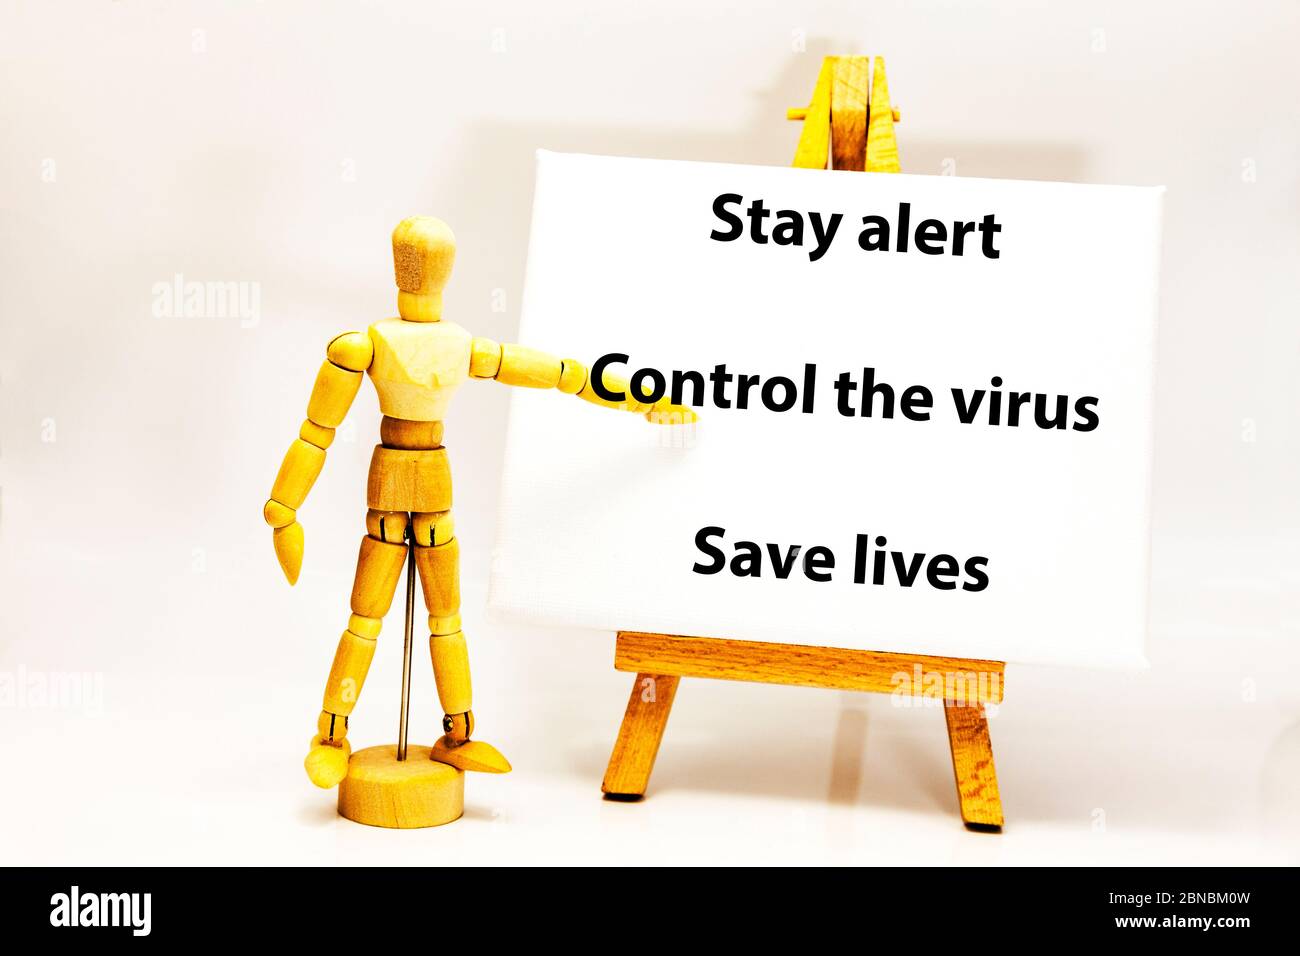 New Government Covid19 slogan, Stay Alert, Control the Virus, Save lives, coronavirus slogan, slogan, mantra, government mantra, sign, concept, Stock Photo